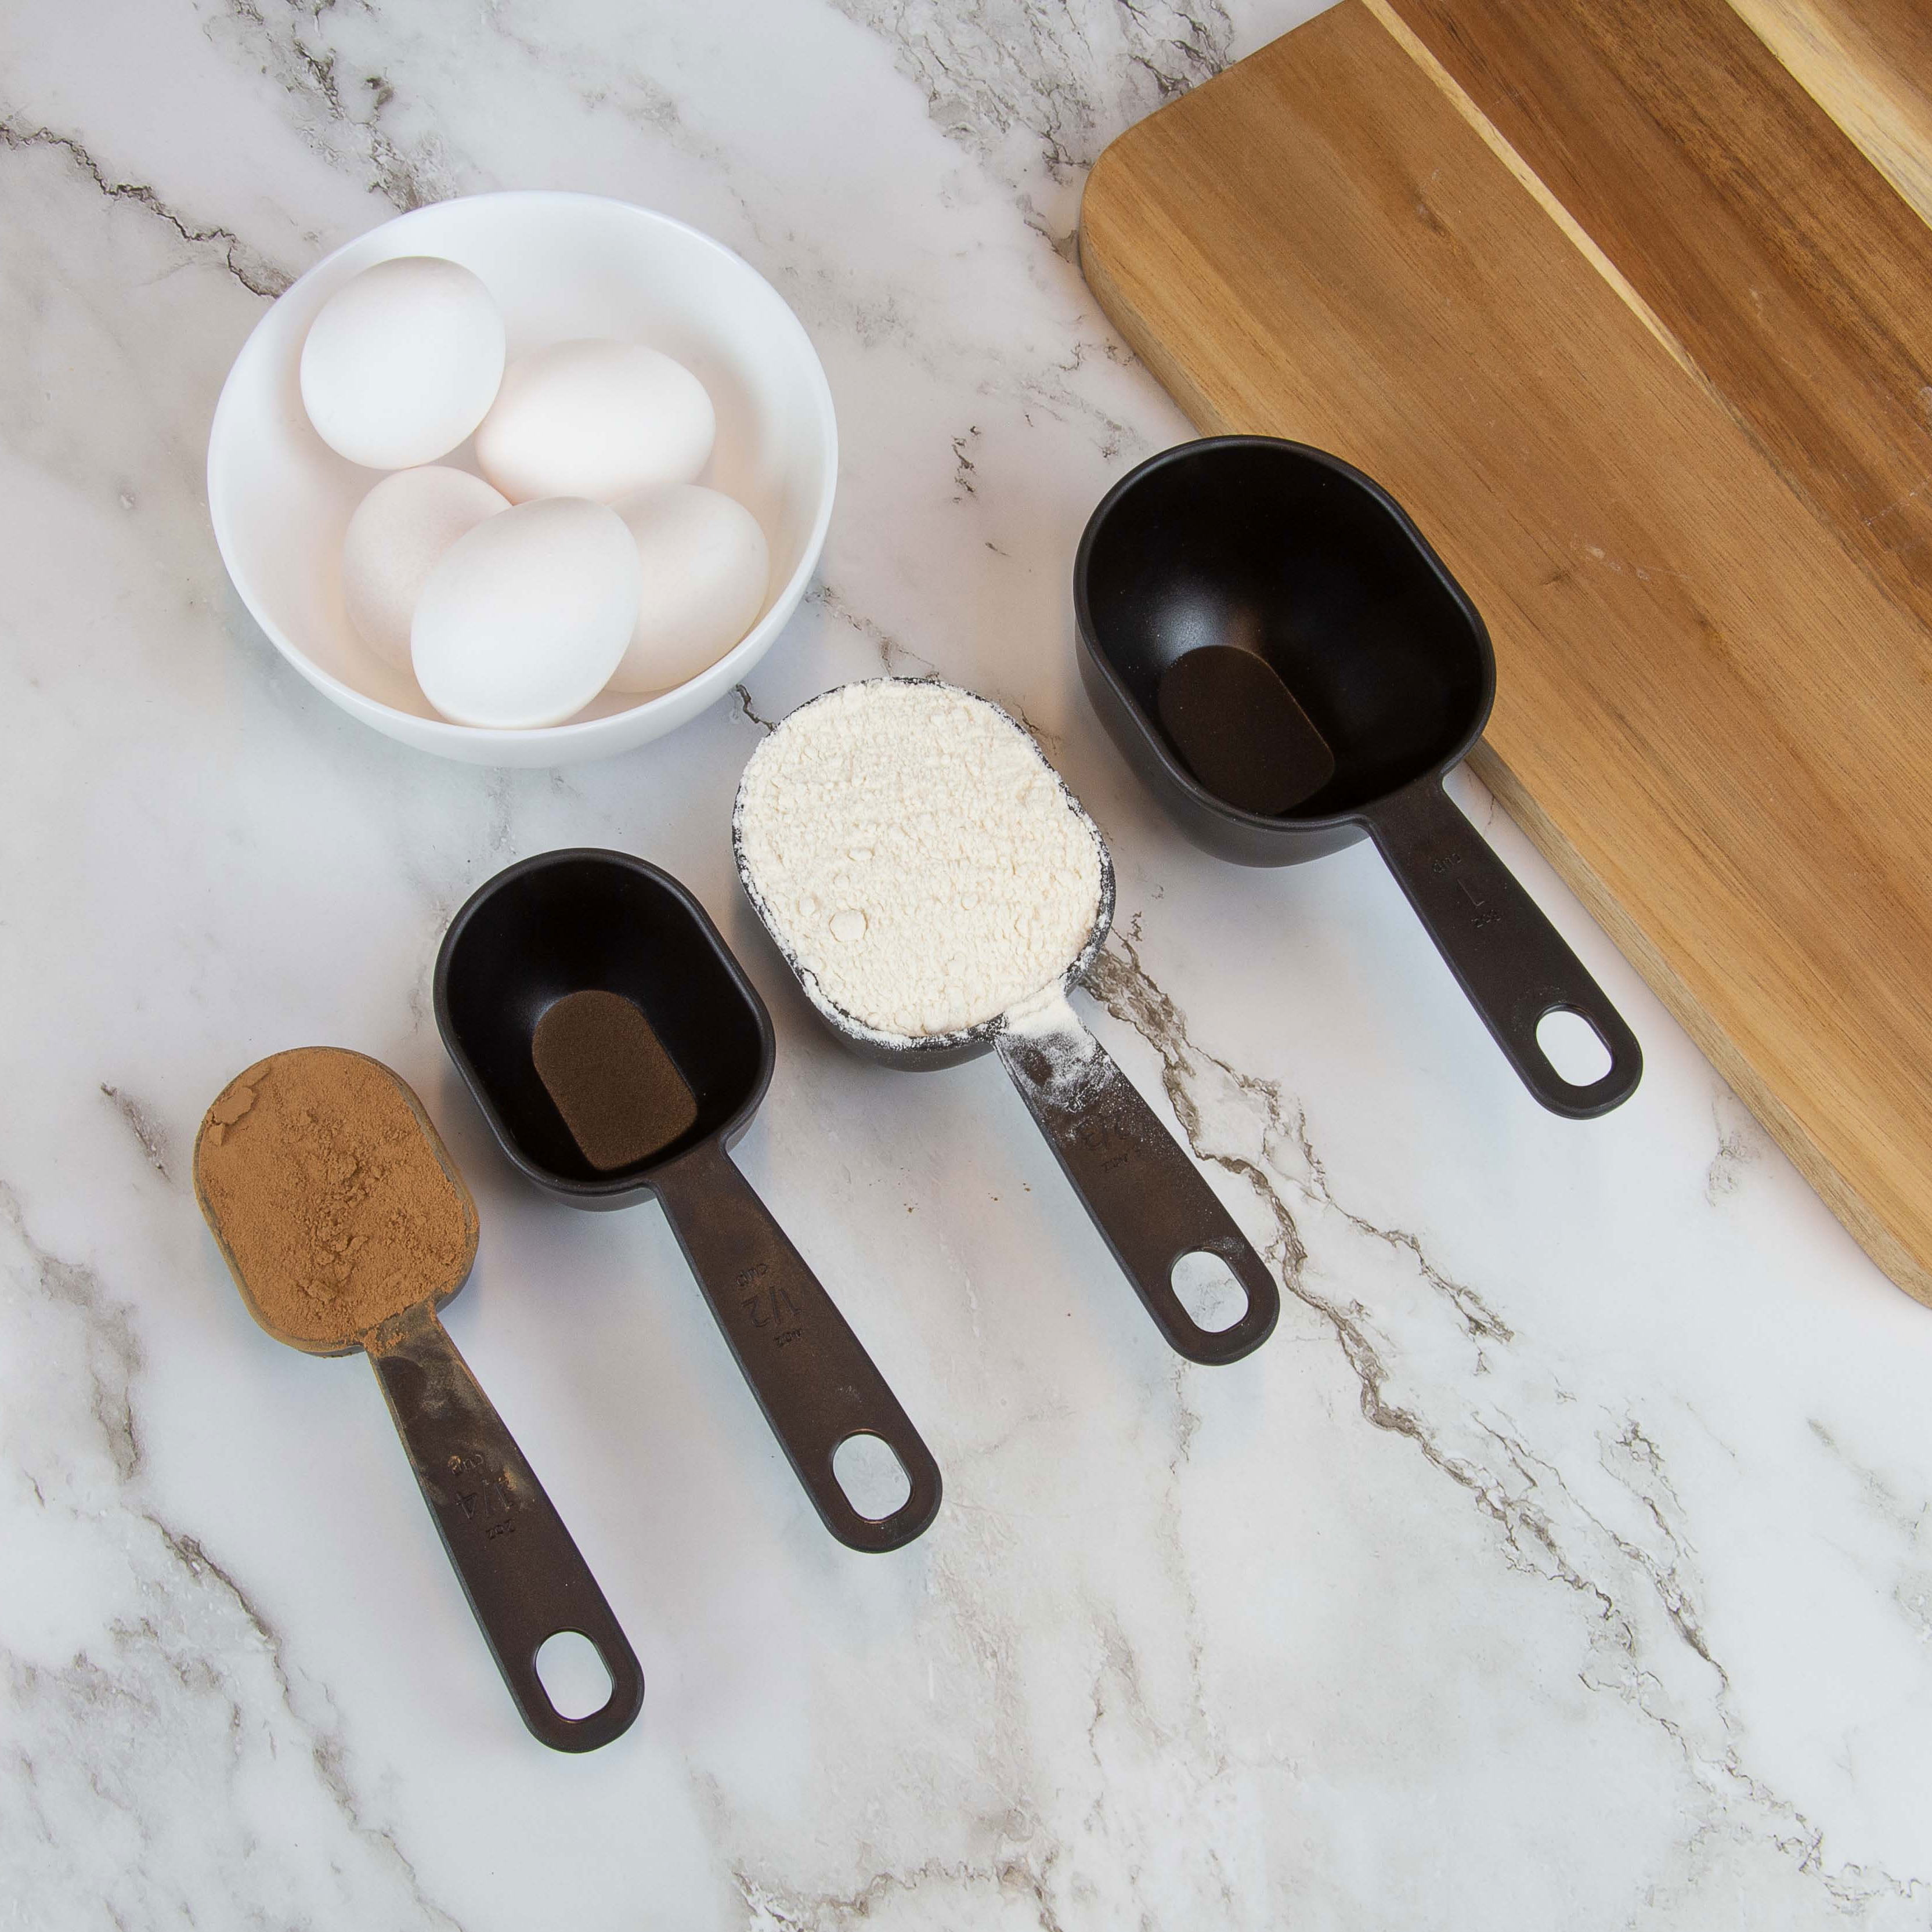 Measuring Cup/Spoon Set, Supreme Kitchen, 8 Piece, White, Plastic